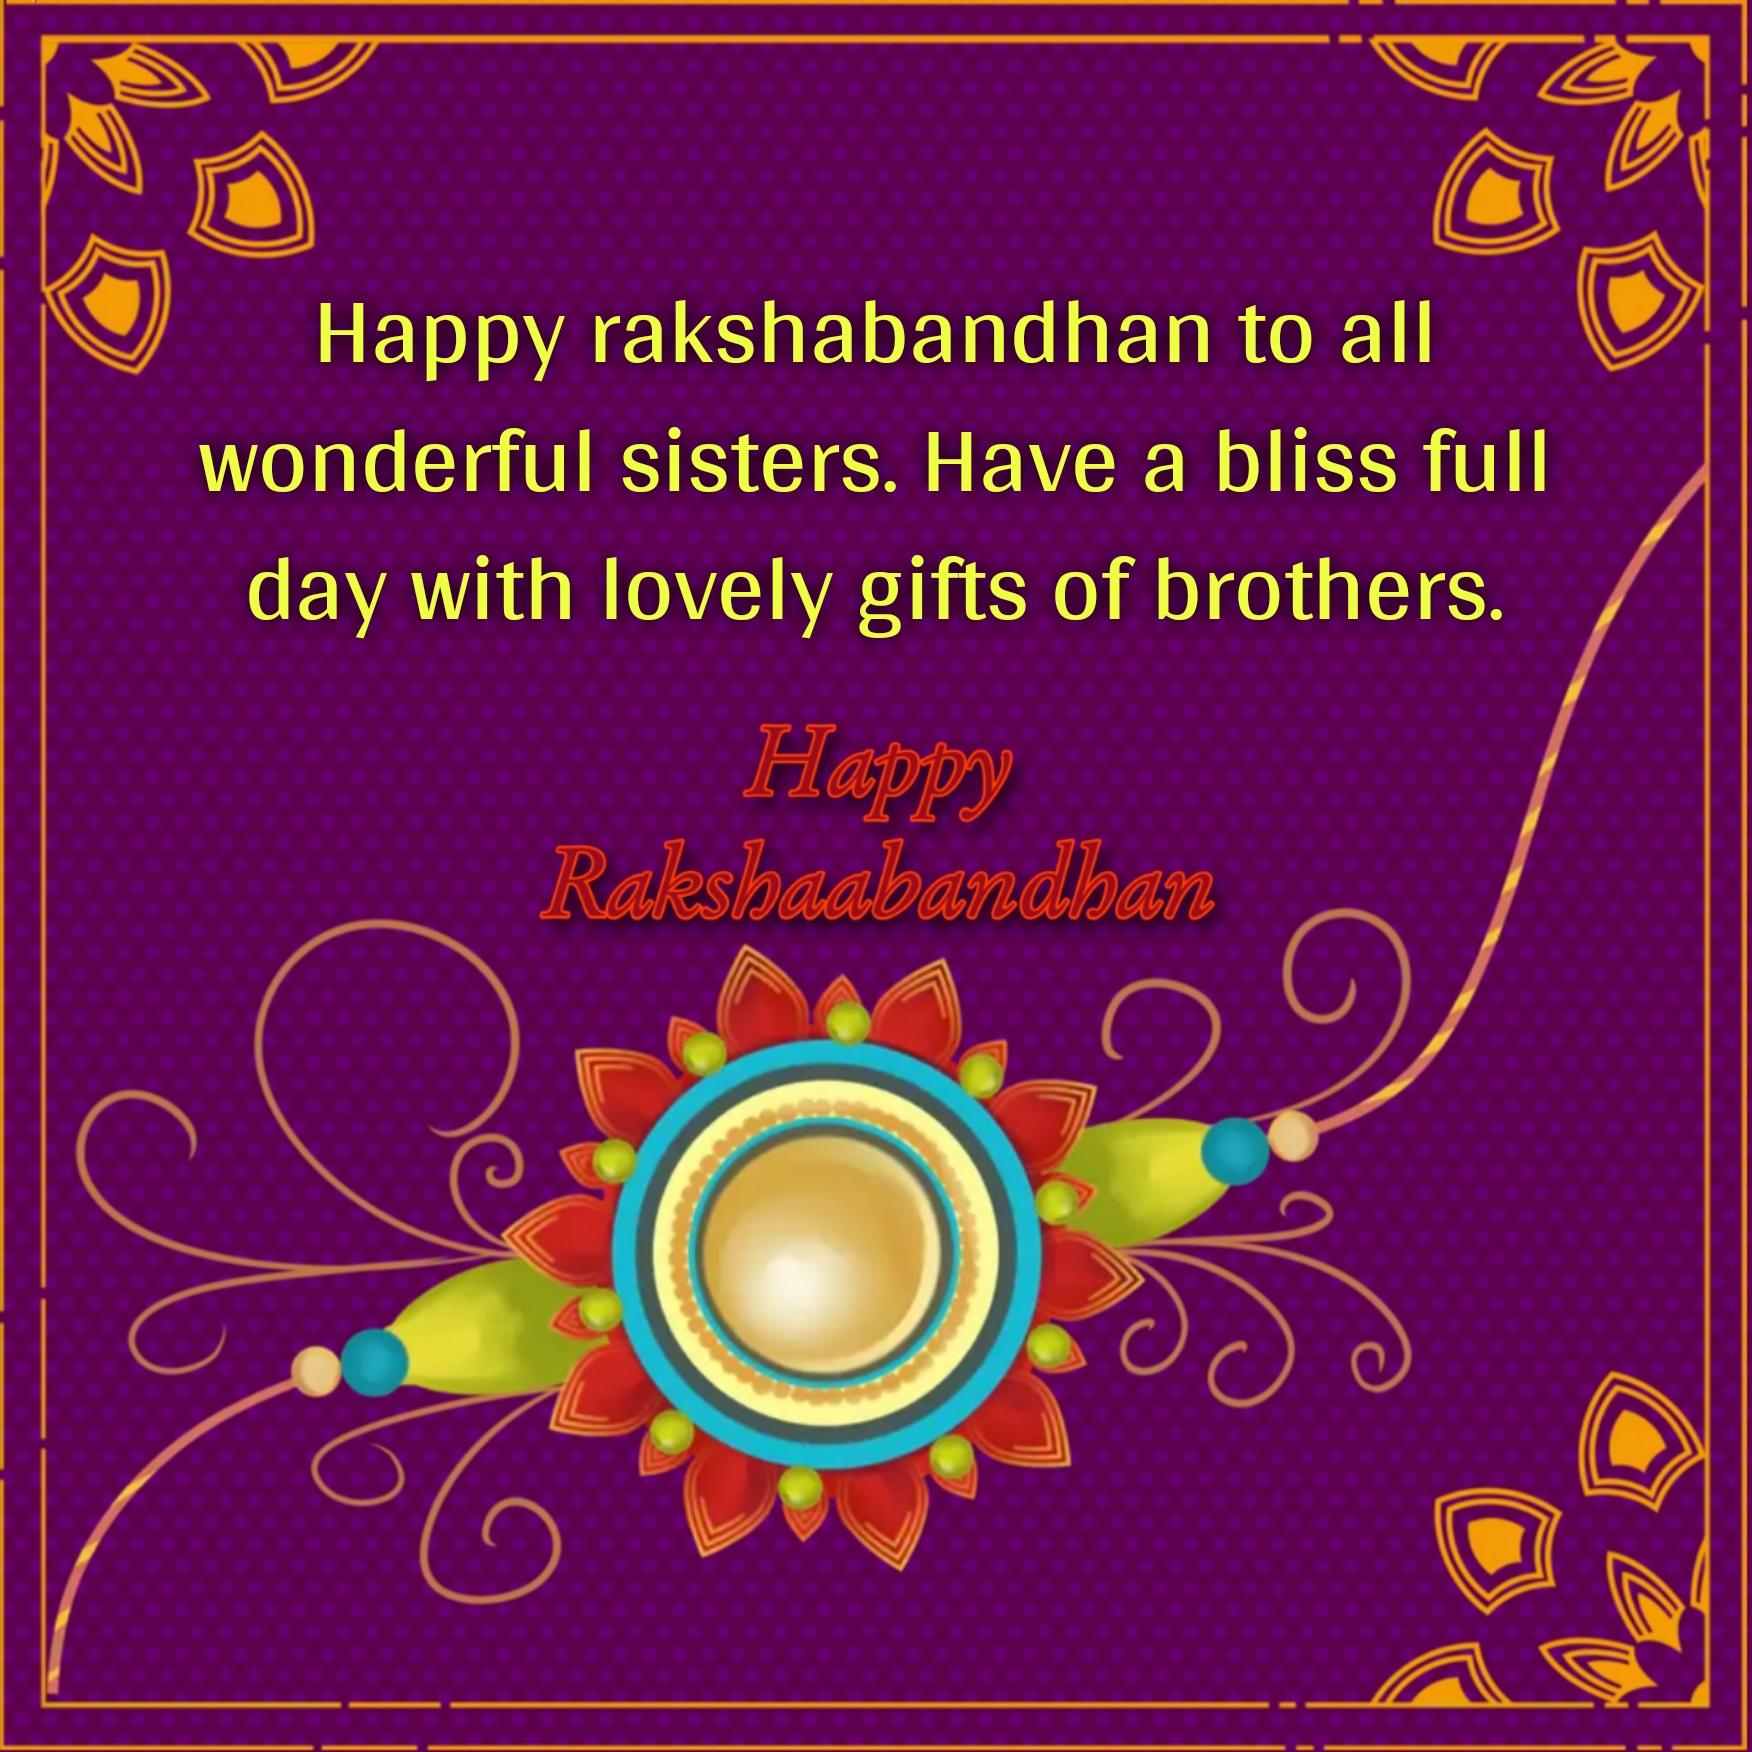 Happy rakshabandhan to all wonderful sisters